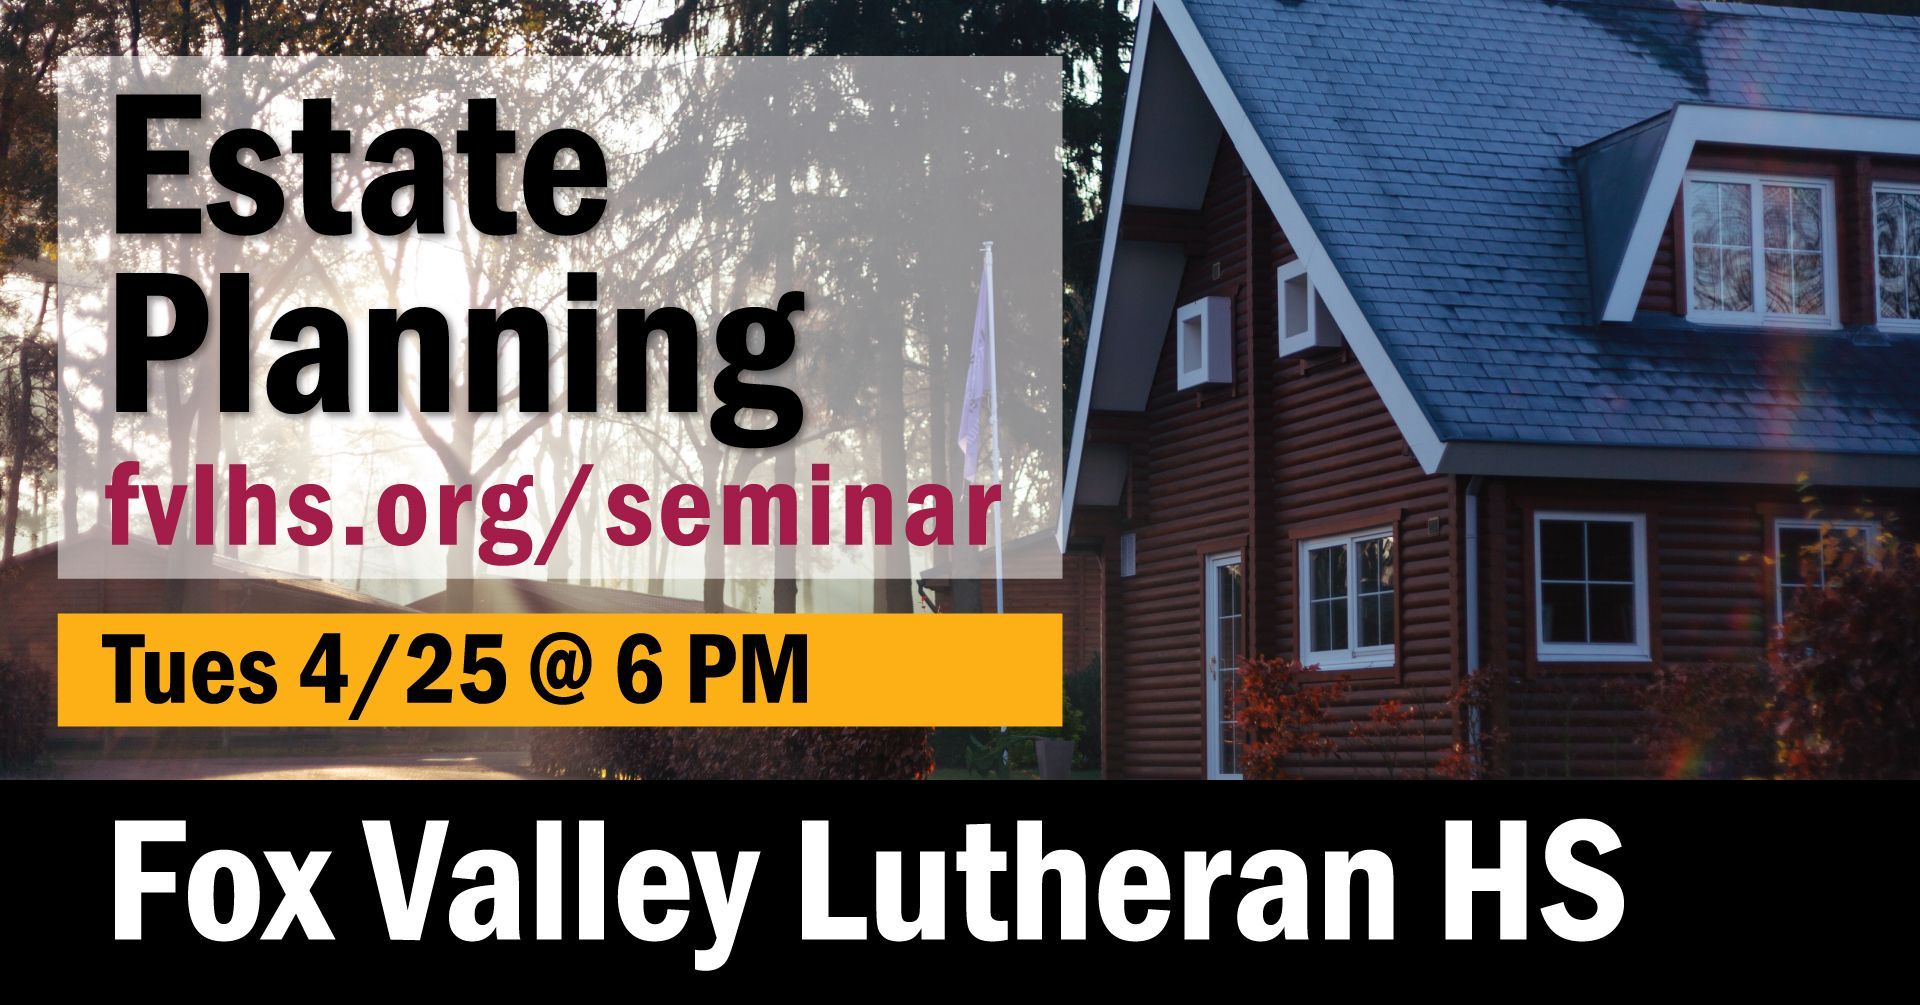 Estate Planning Seminar, Thursday, April 27, at 6 PM